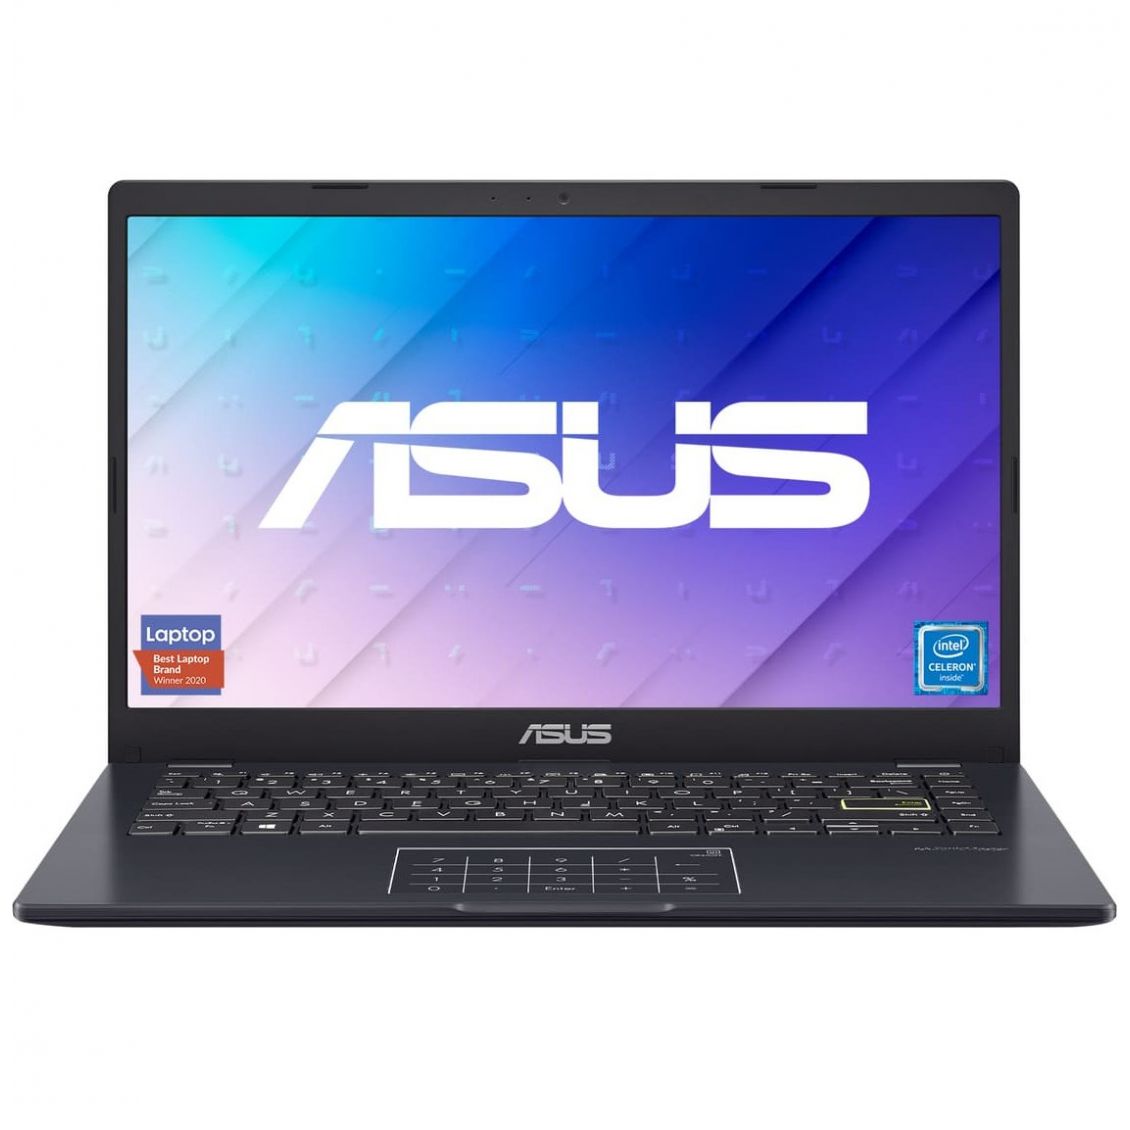 Laptop Asus E410ma Ek1281w Cel 4 128 4155